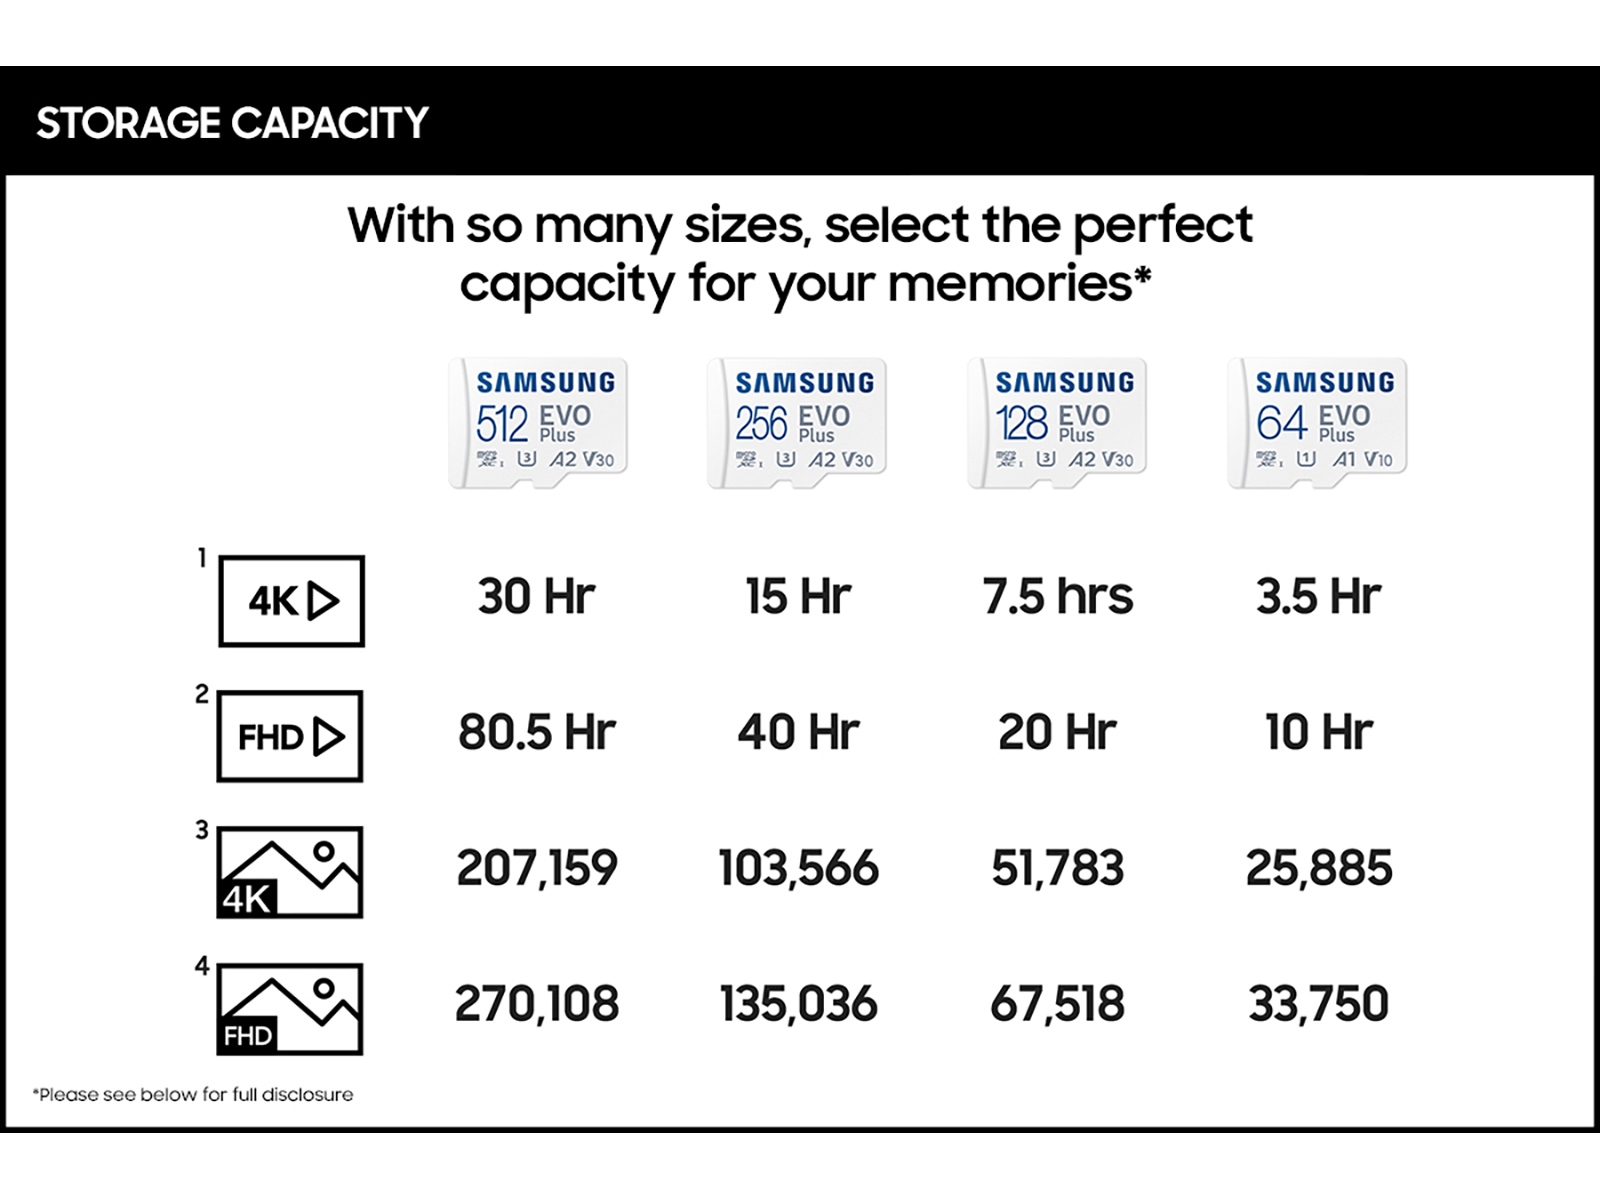 Micro SD 256 Go Samsung Class 10 +adaptateur vers SD